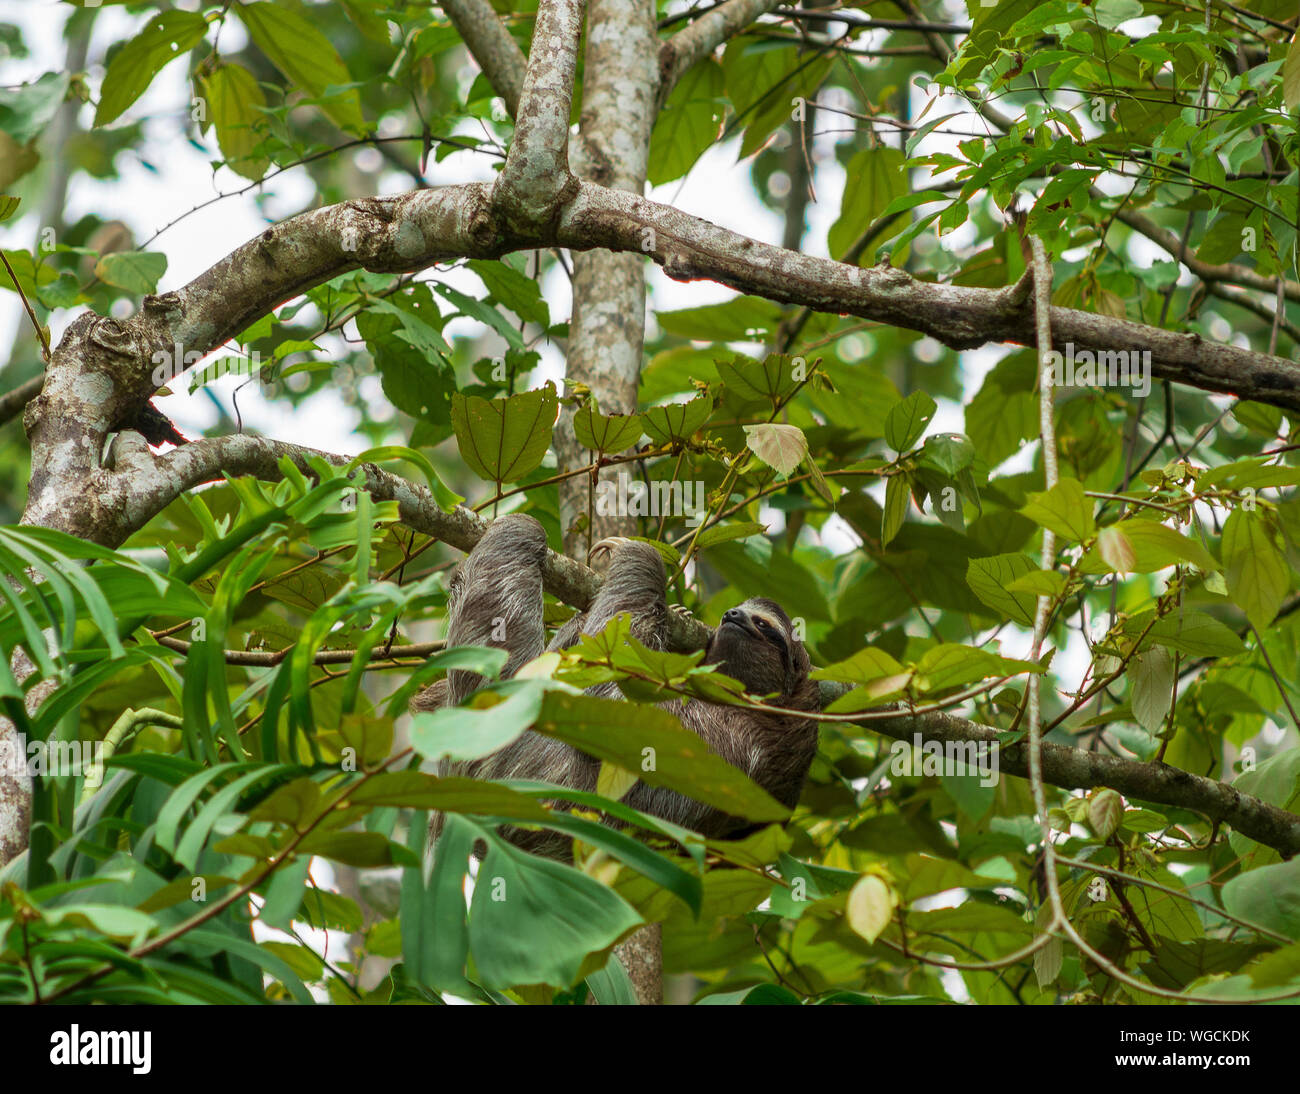 Wild drei toed Sloth Bradypus Costa Rica Stockfoto